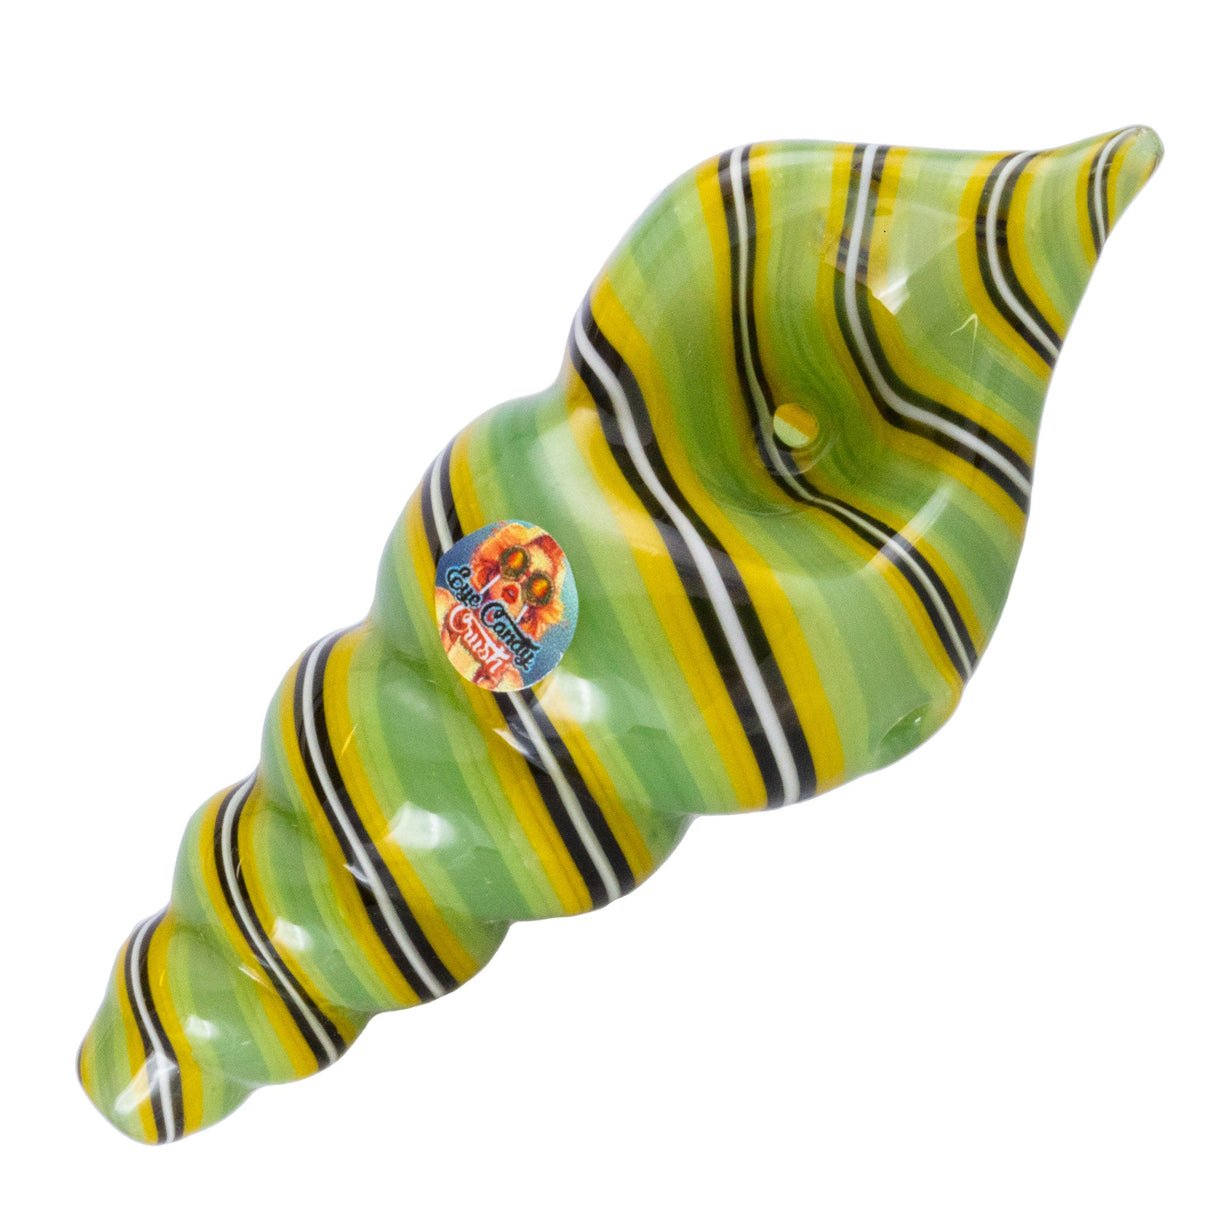 Crush Eye Candy Sea Shell Hand Pipe in Vibrant Colors - 4" Borosilicate Glass